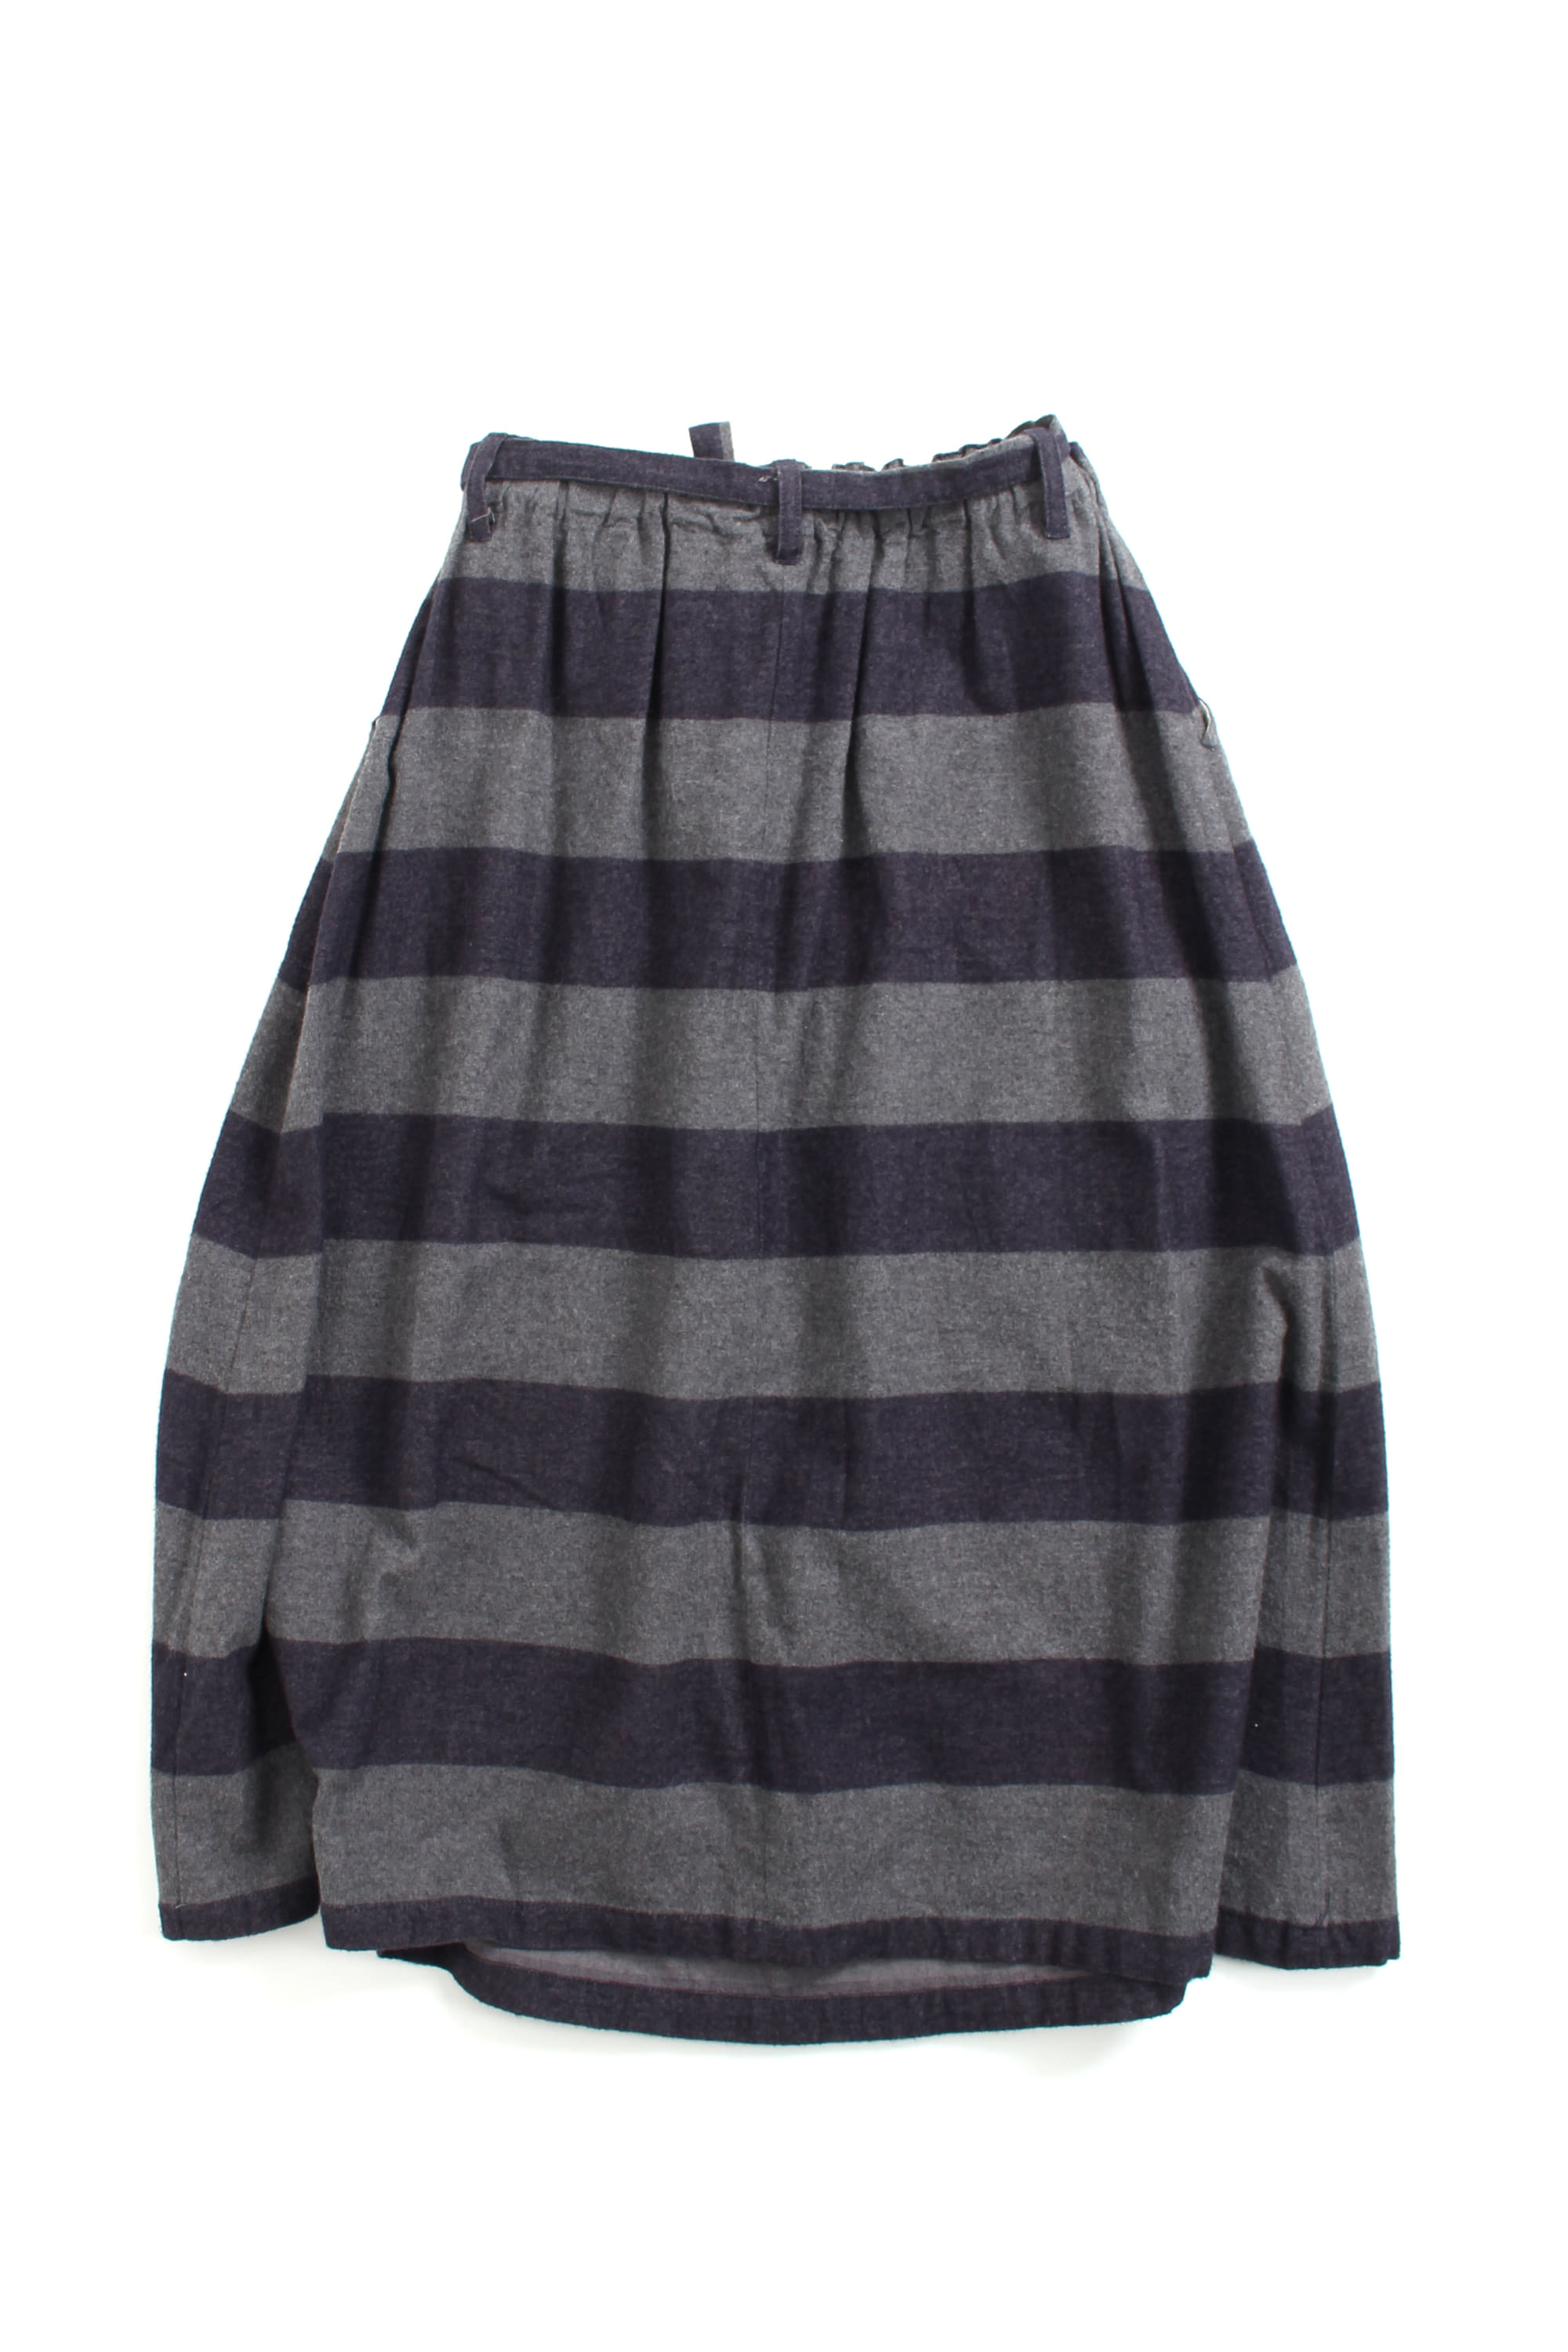 SM2 Stripe Skirts(FREE)